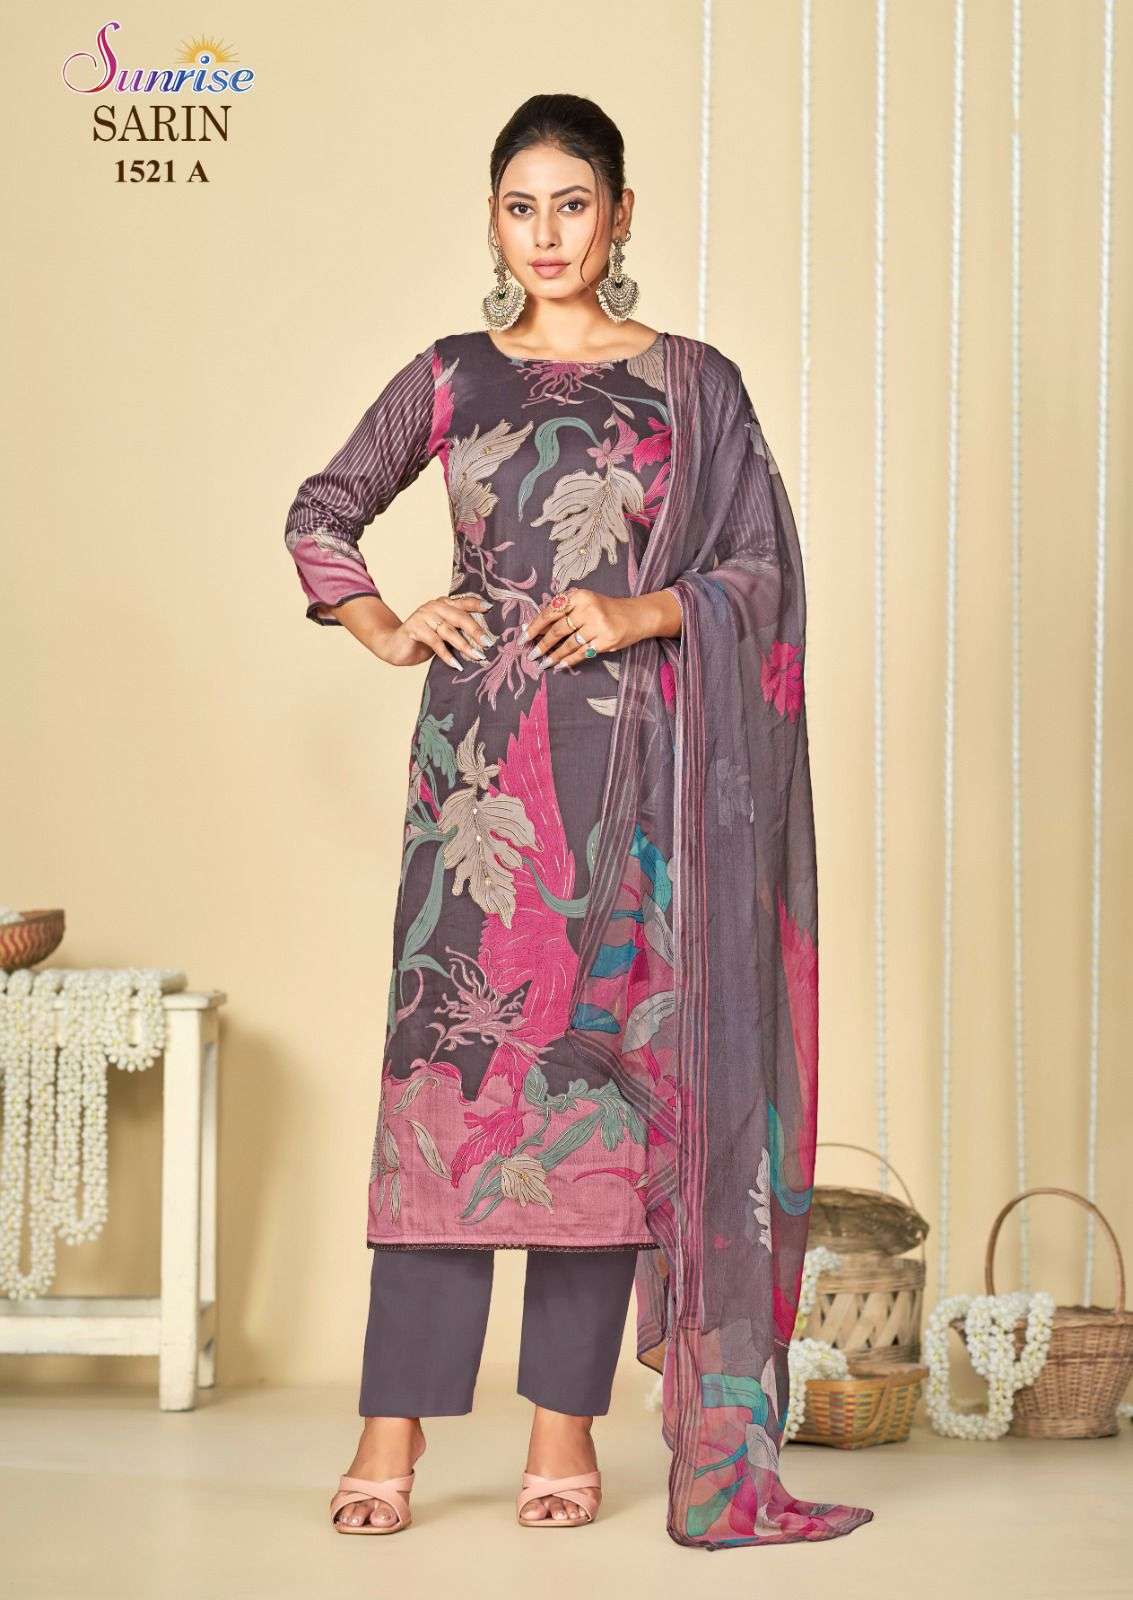 Sunrise Sarin 1521 Exclusive Jam Silk Salwar Suit Wholesale Price Catalog Dealer